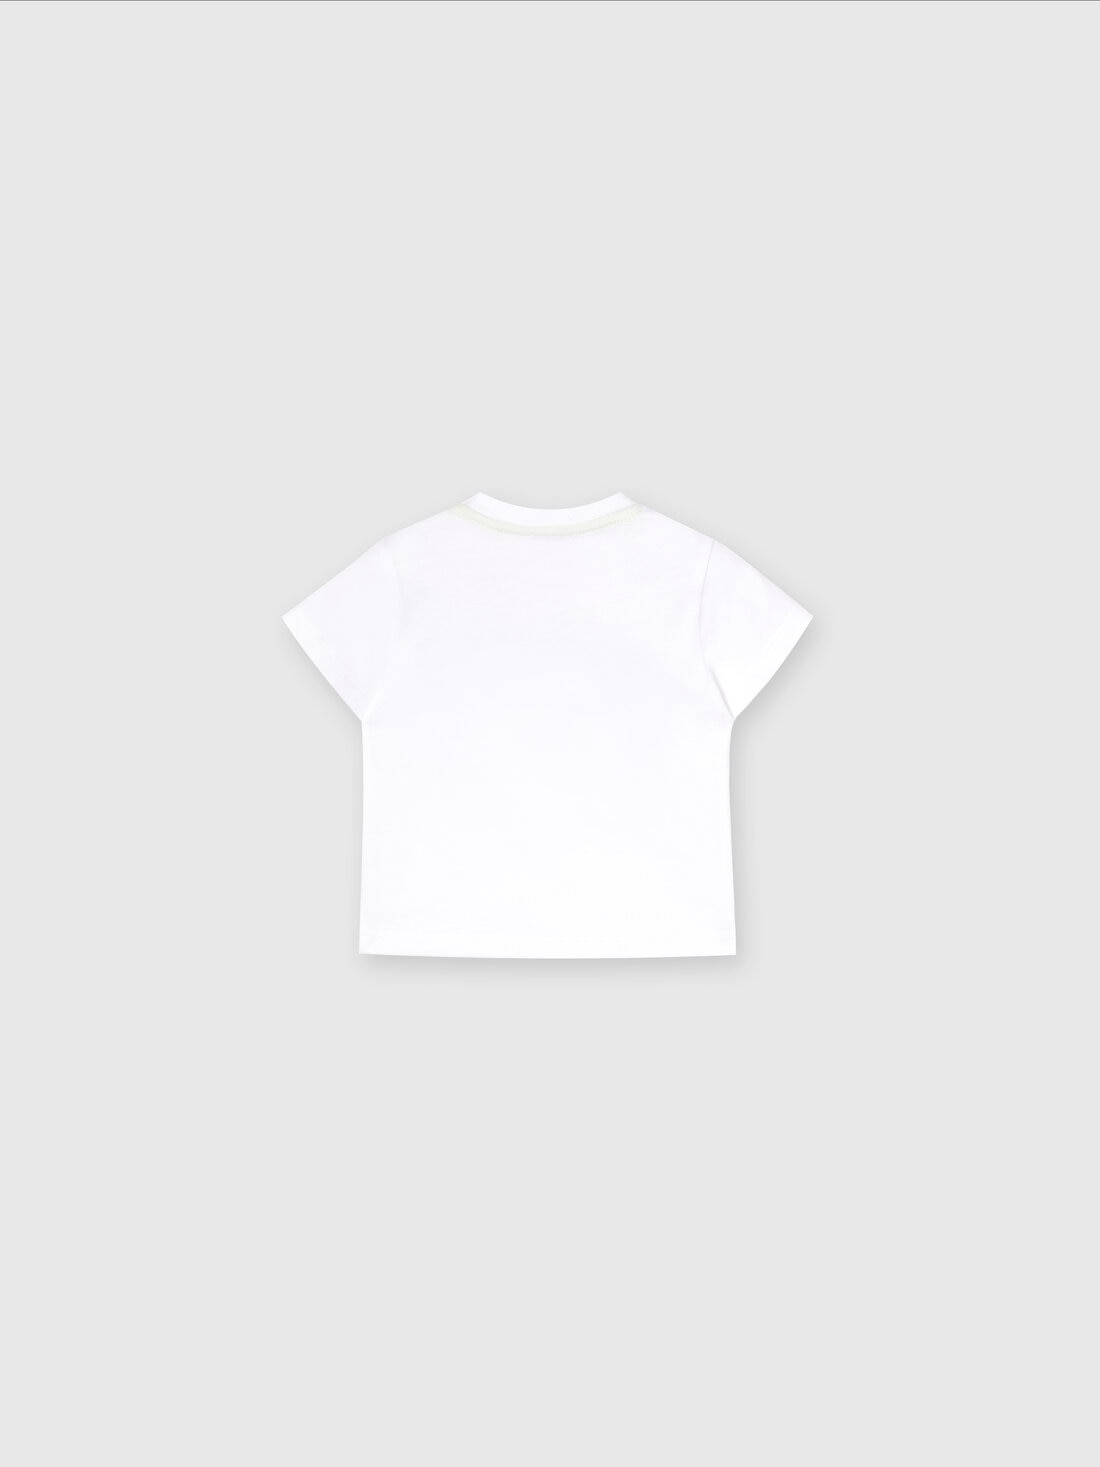 Tシャツ コットンジャージー ロゴ入り, マルチカラー  - KS24SL00BV00FWS019C - 1